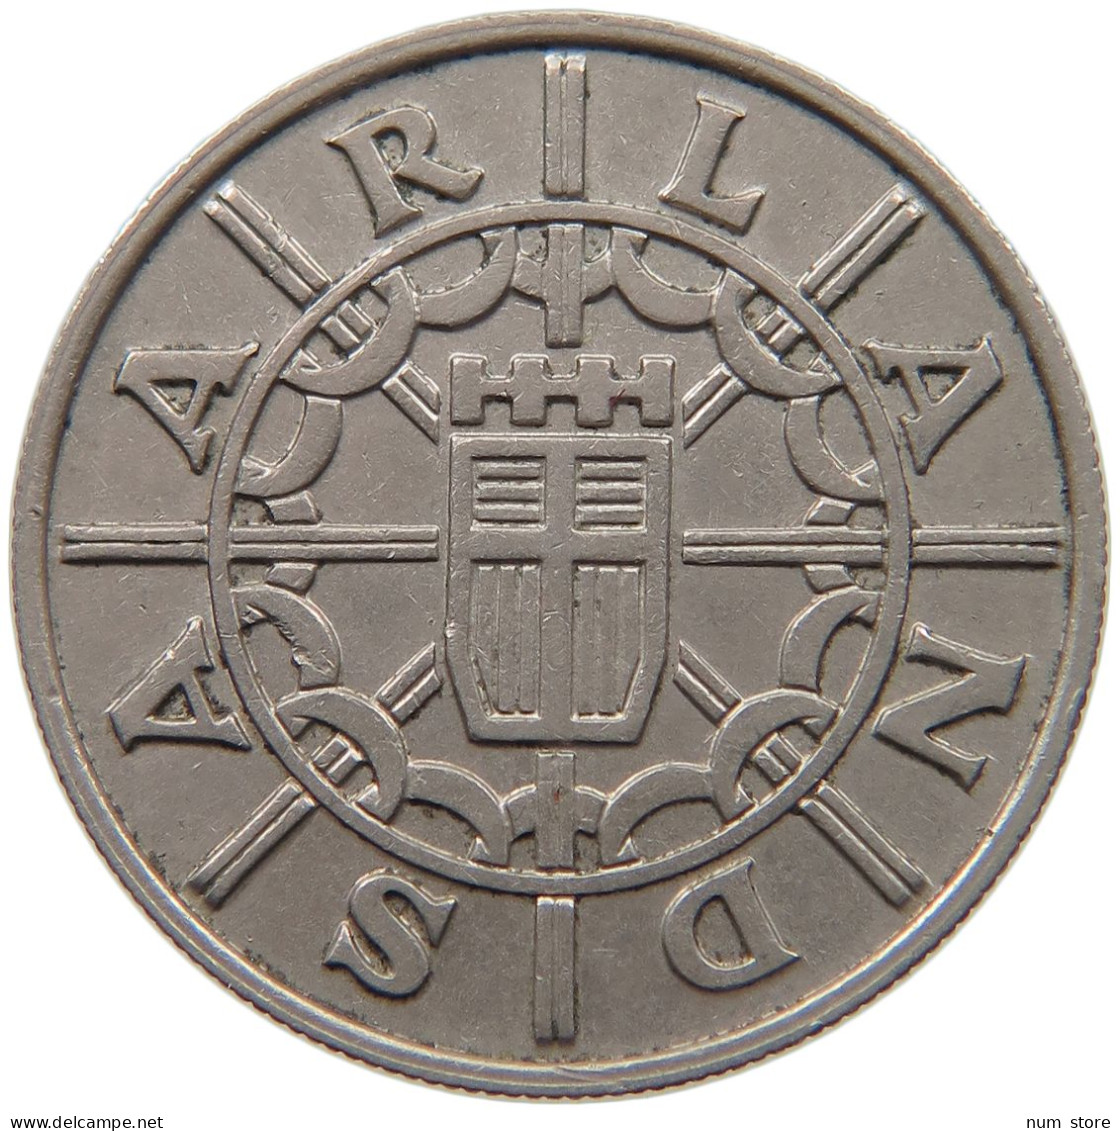 SAARLAND 100 FRANKEN 1955  #c010 0251 - 100 Francos